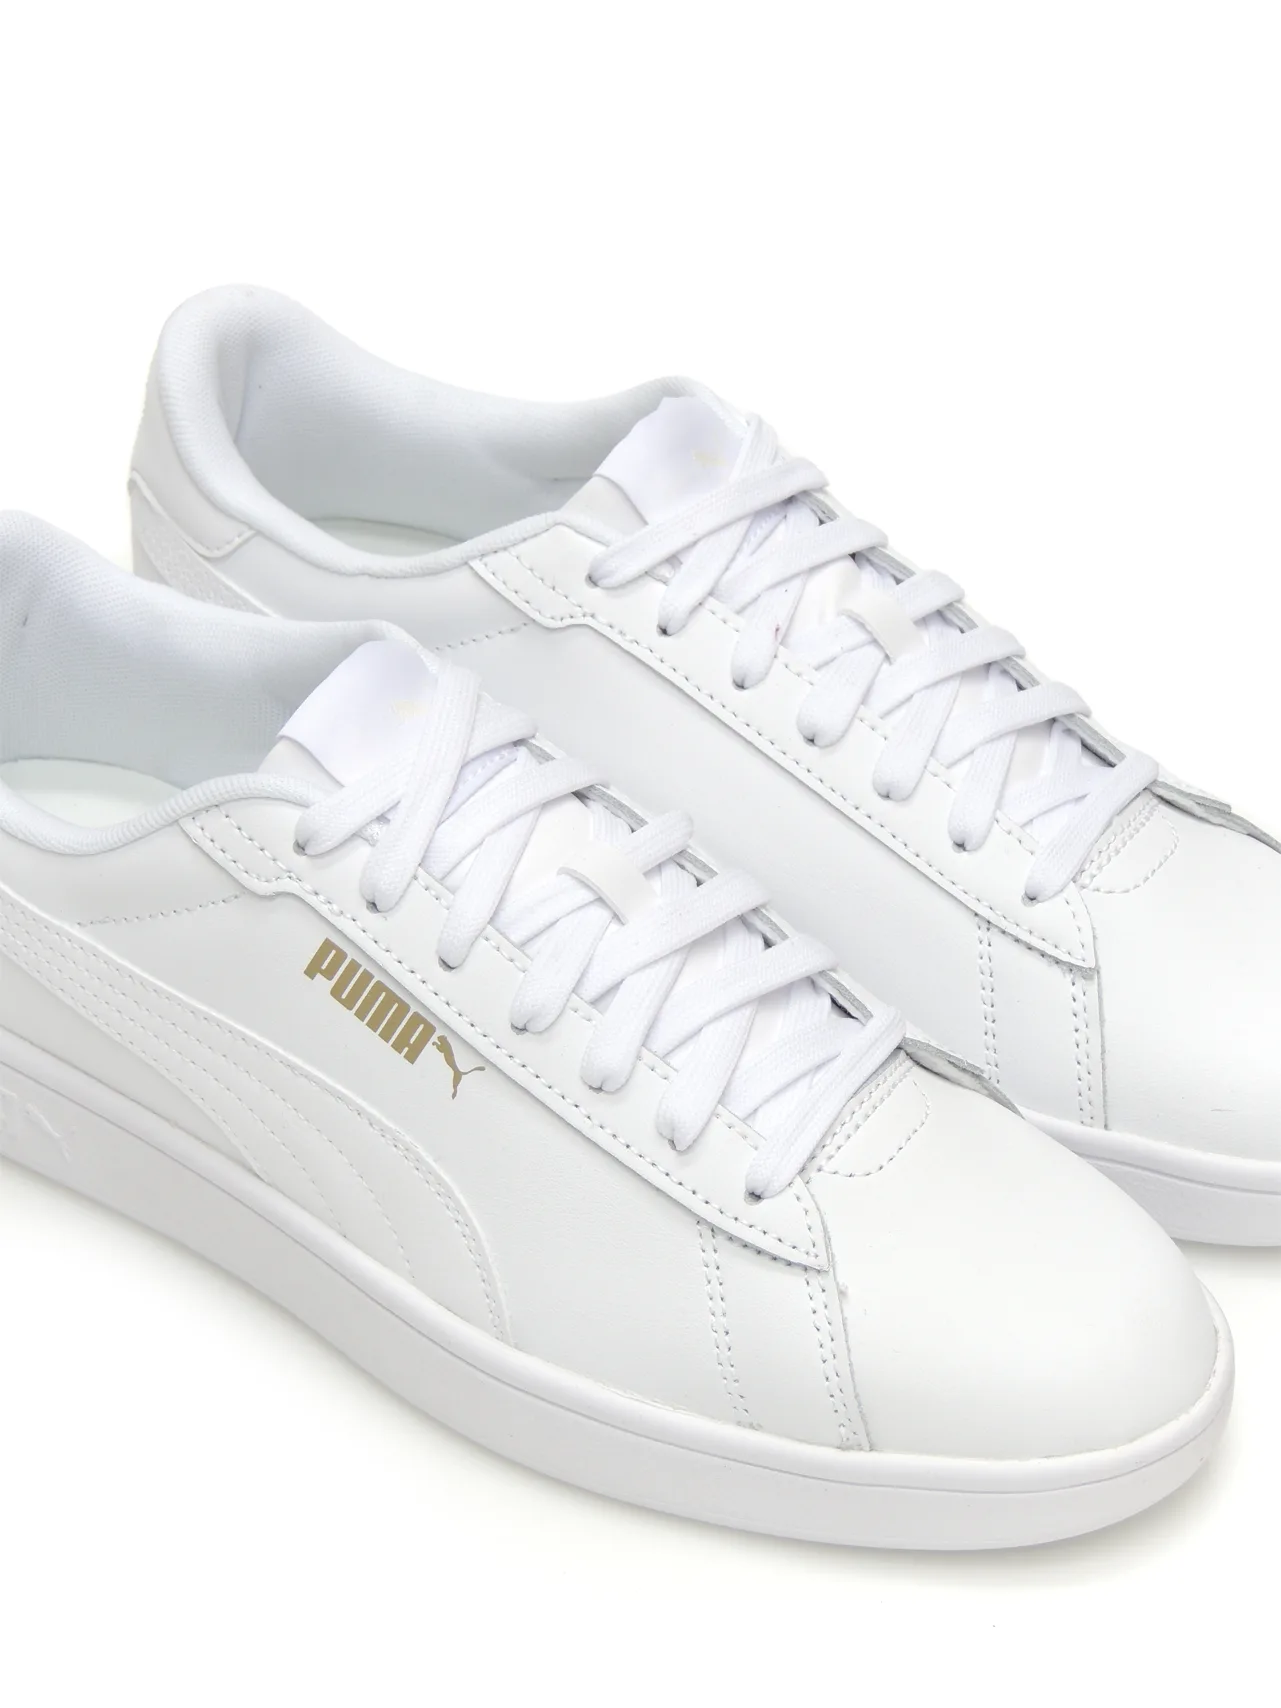 sneakers--puma-390987w-piel-blanco